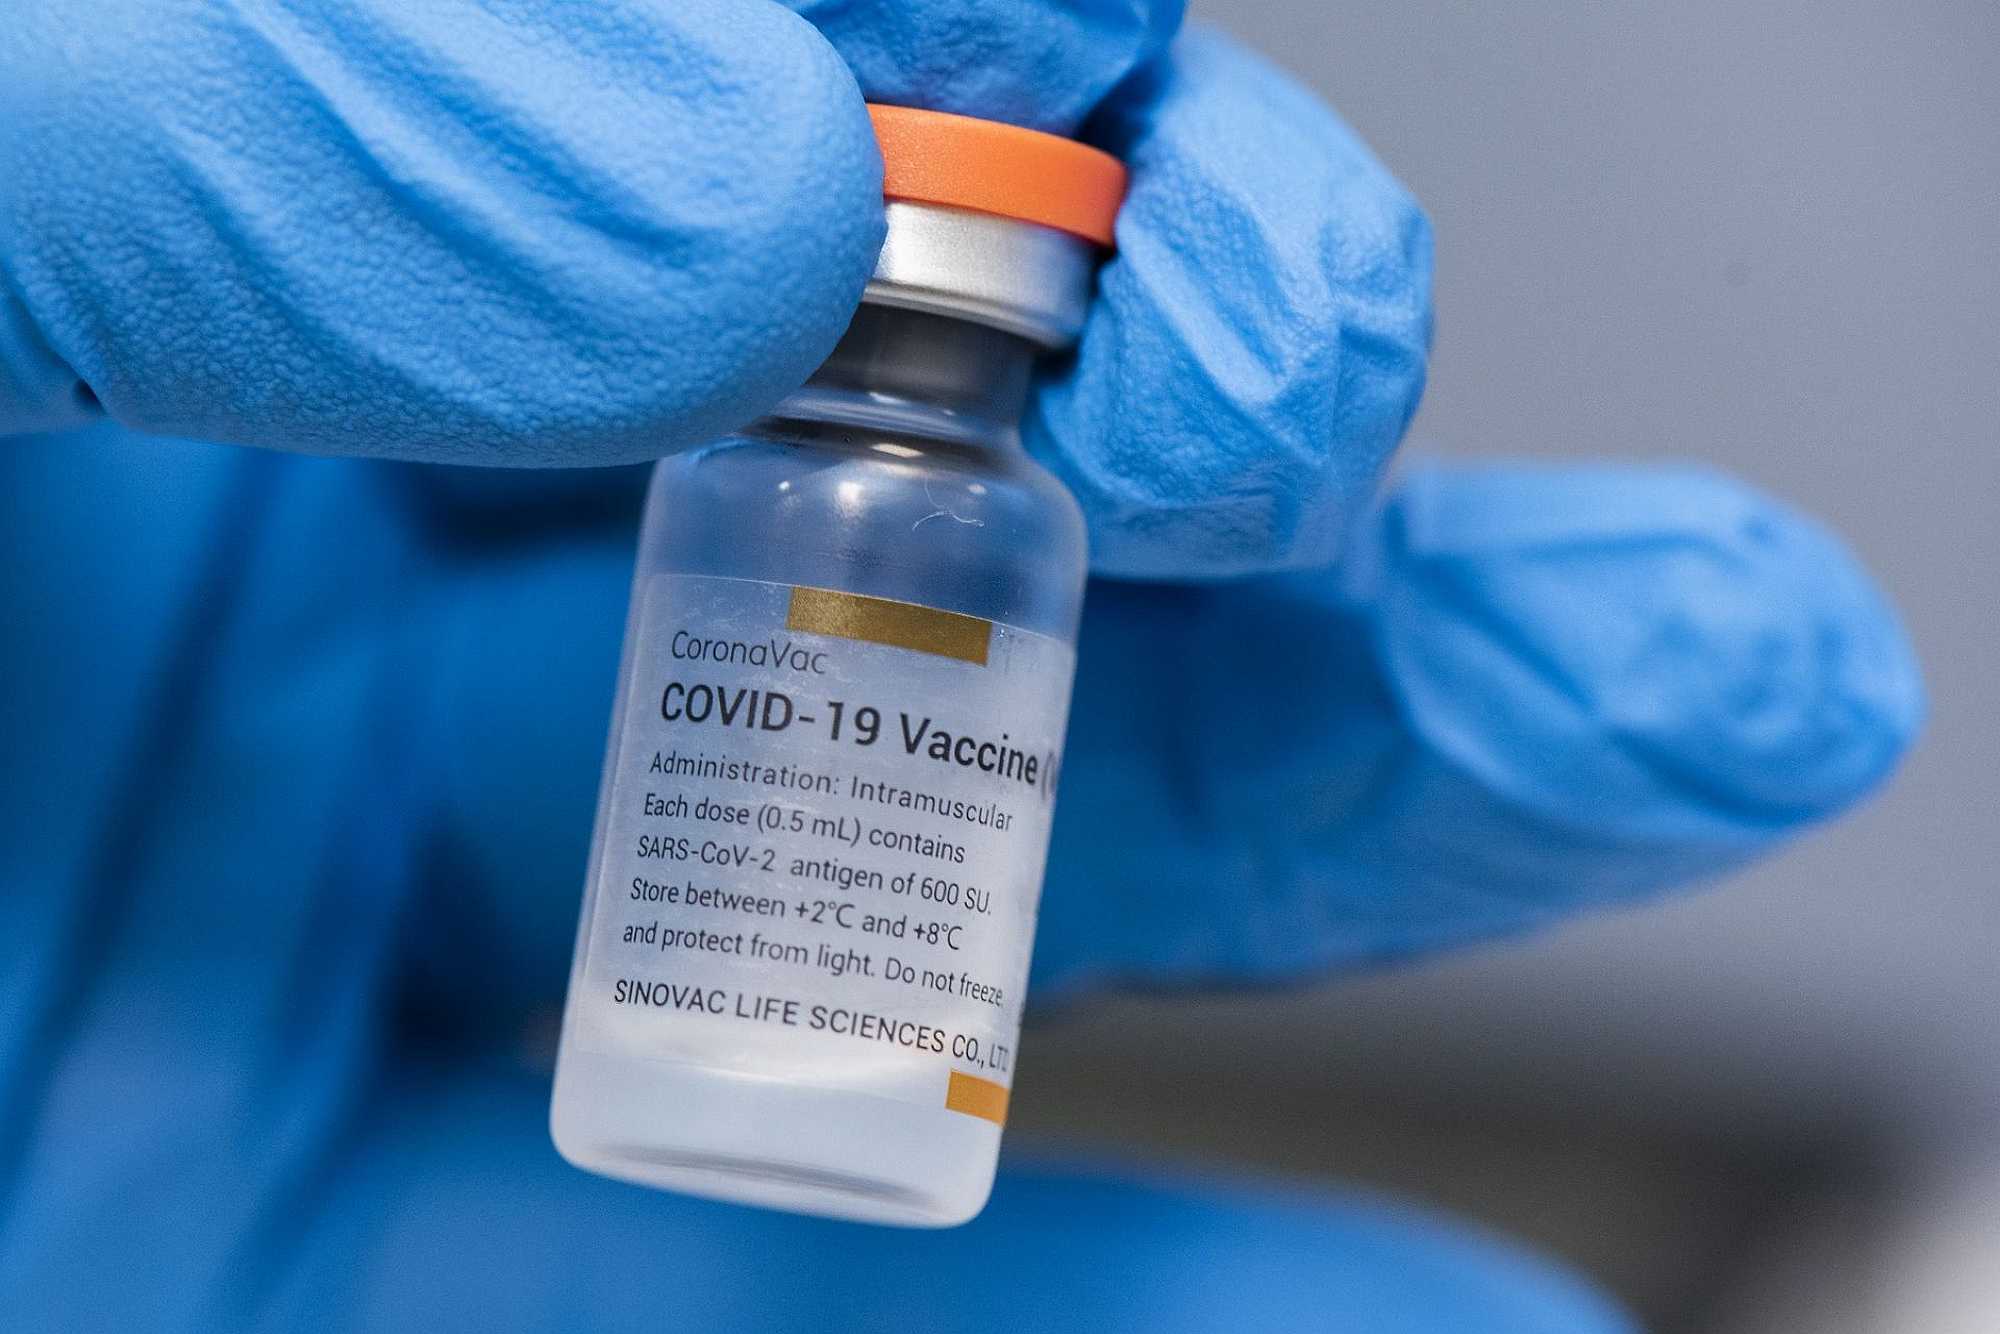 Coronavac, the Brazilian-produced vaccine used in the study